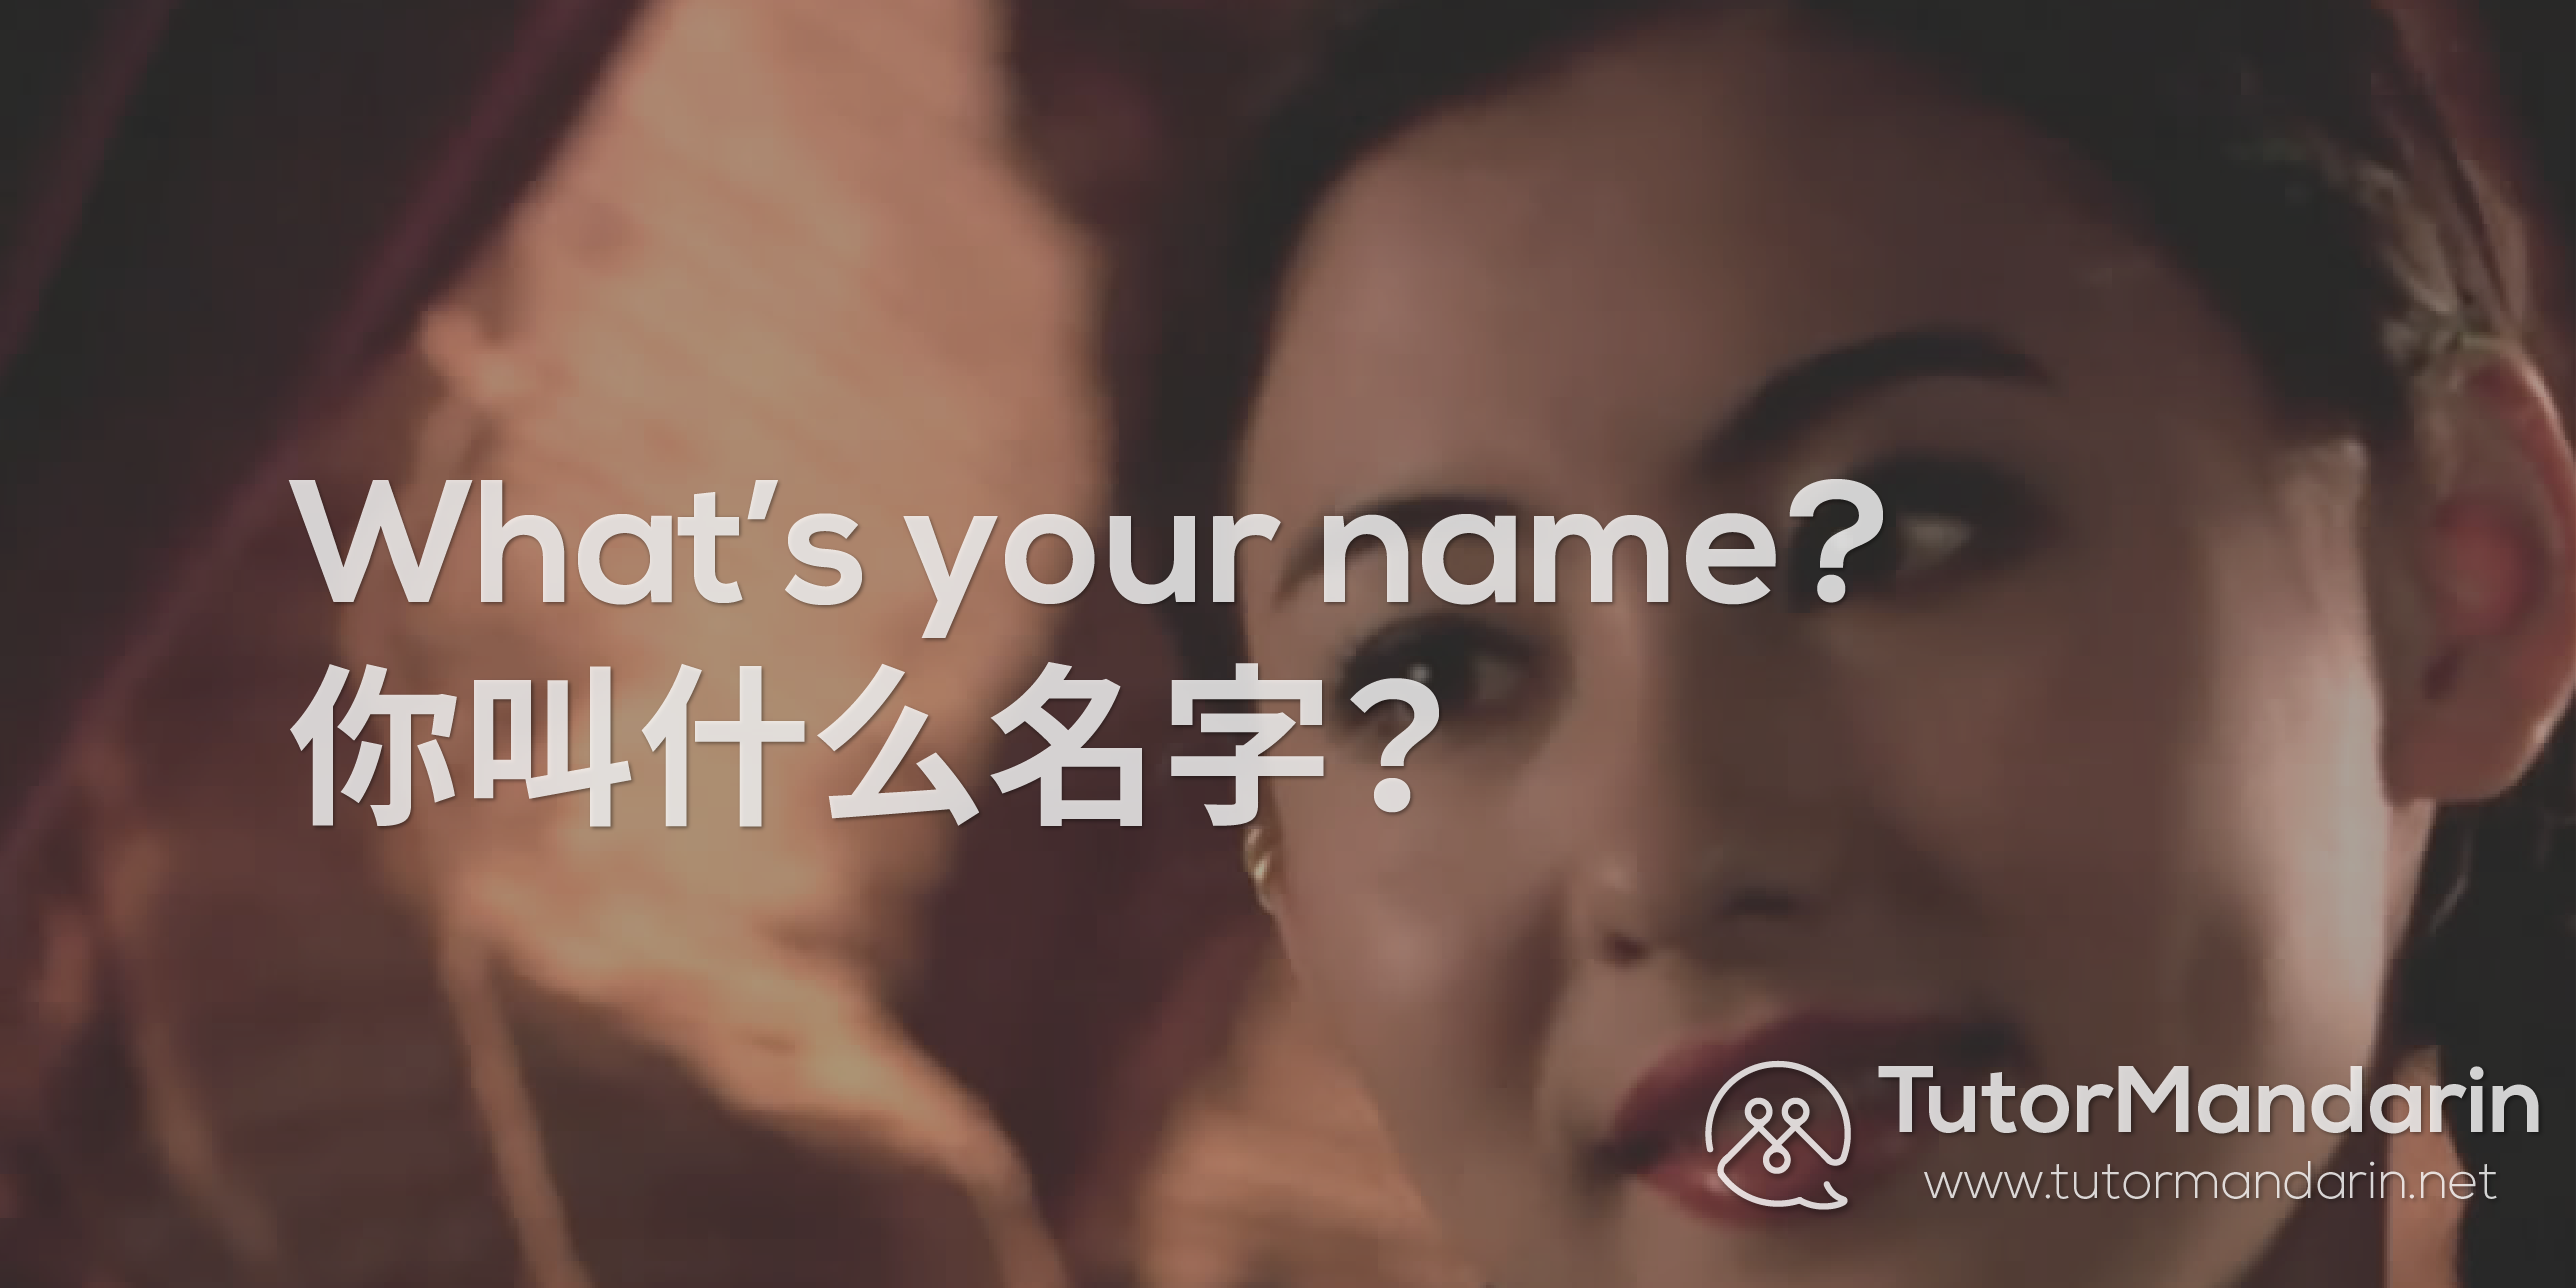 tutor mandarin, tutormandarin, contact, help, name, what's you name, introduction